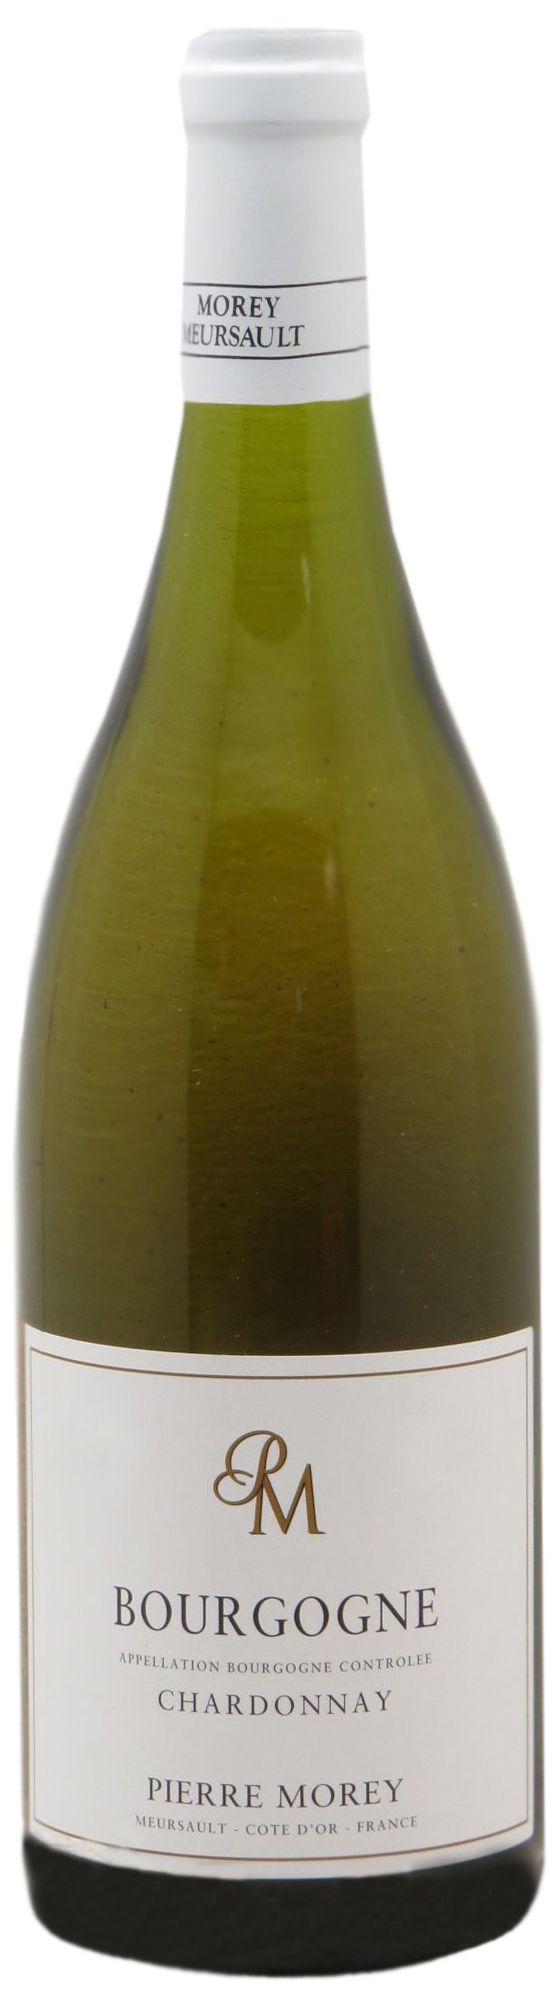 Domaine Pierre Morey & Morey-Blanc, Bourgogne Chardonnay, 2011